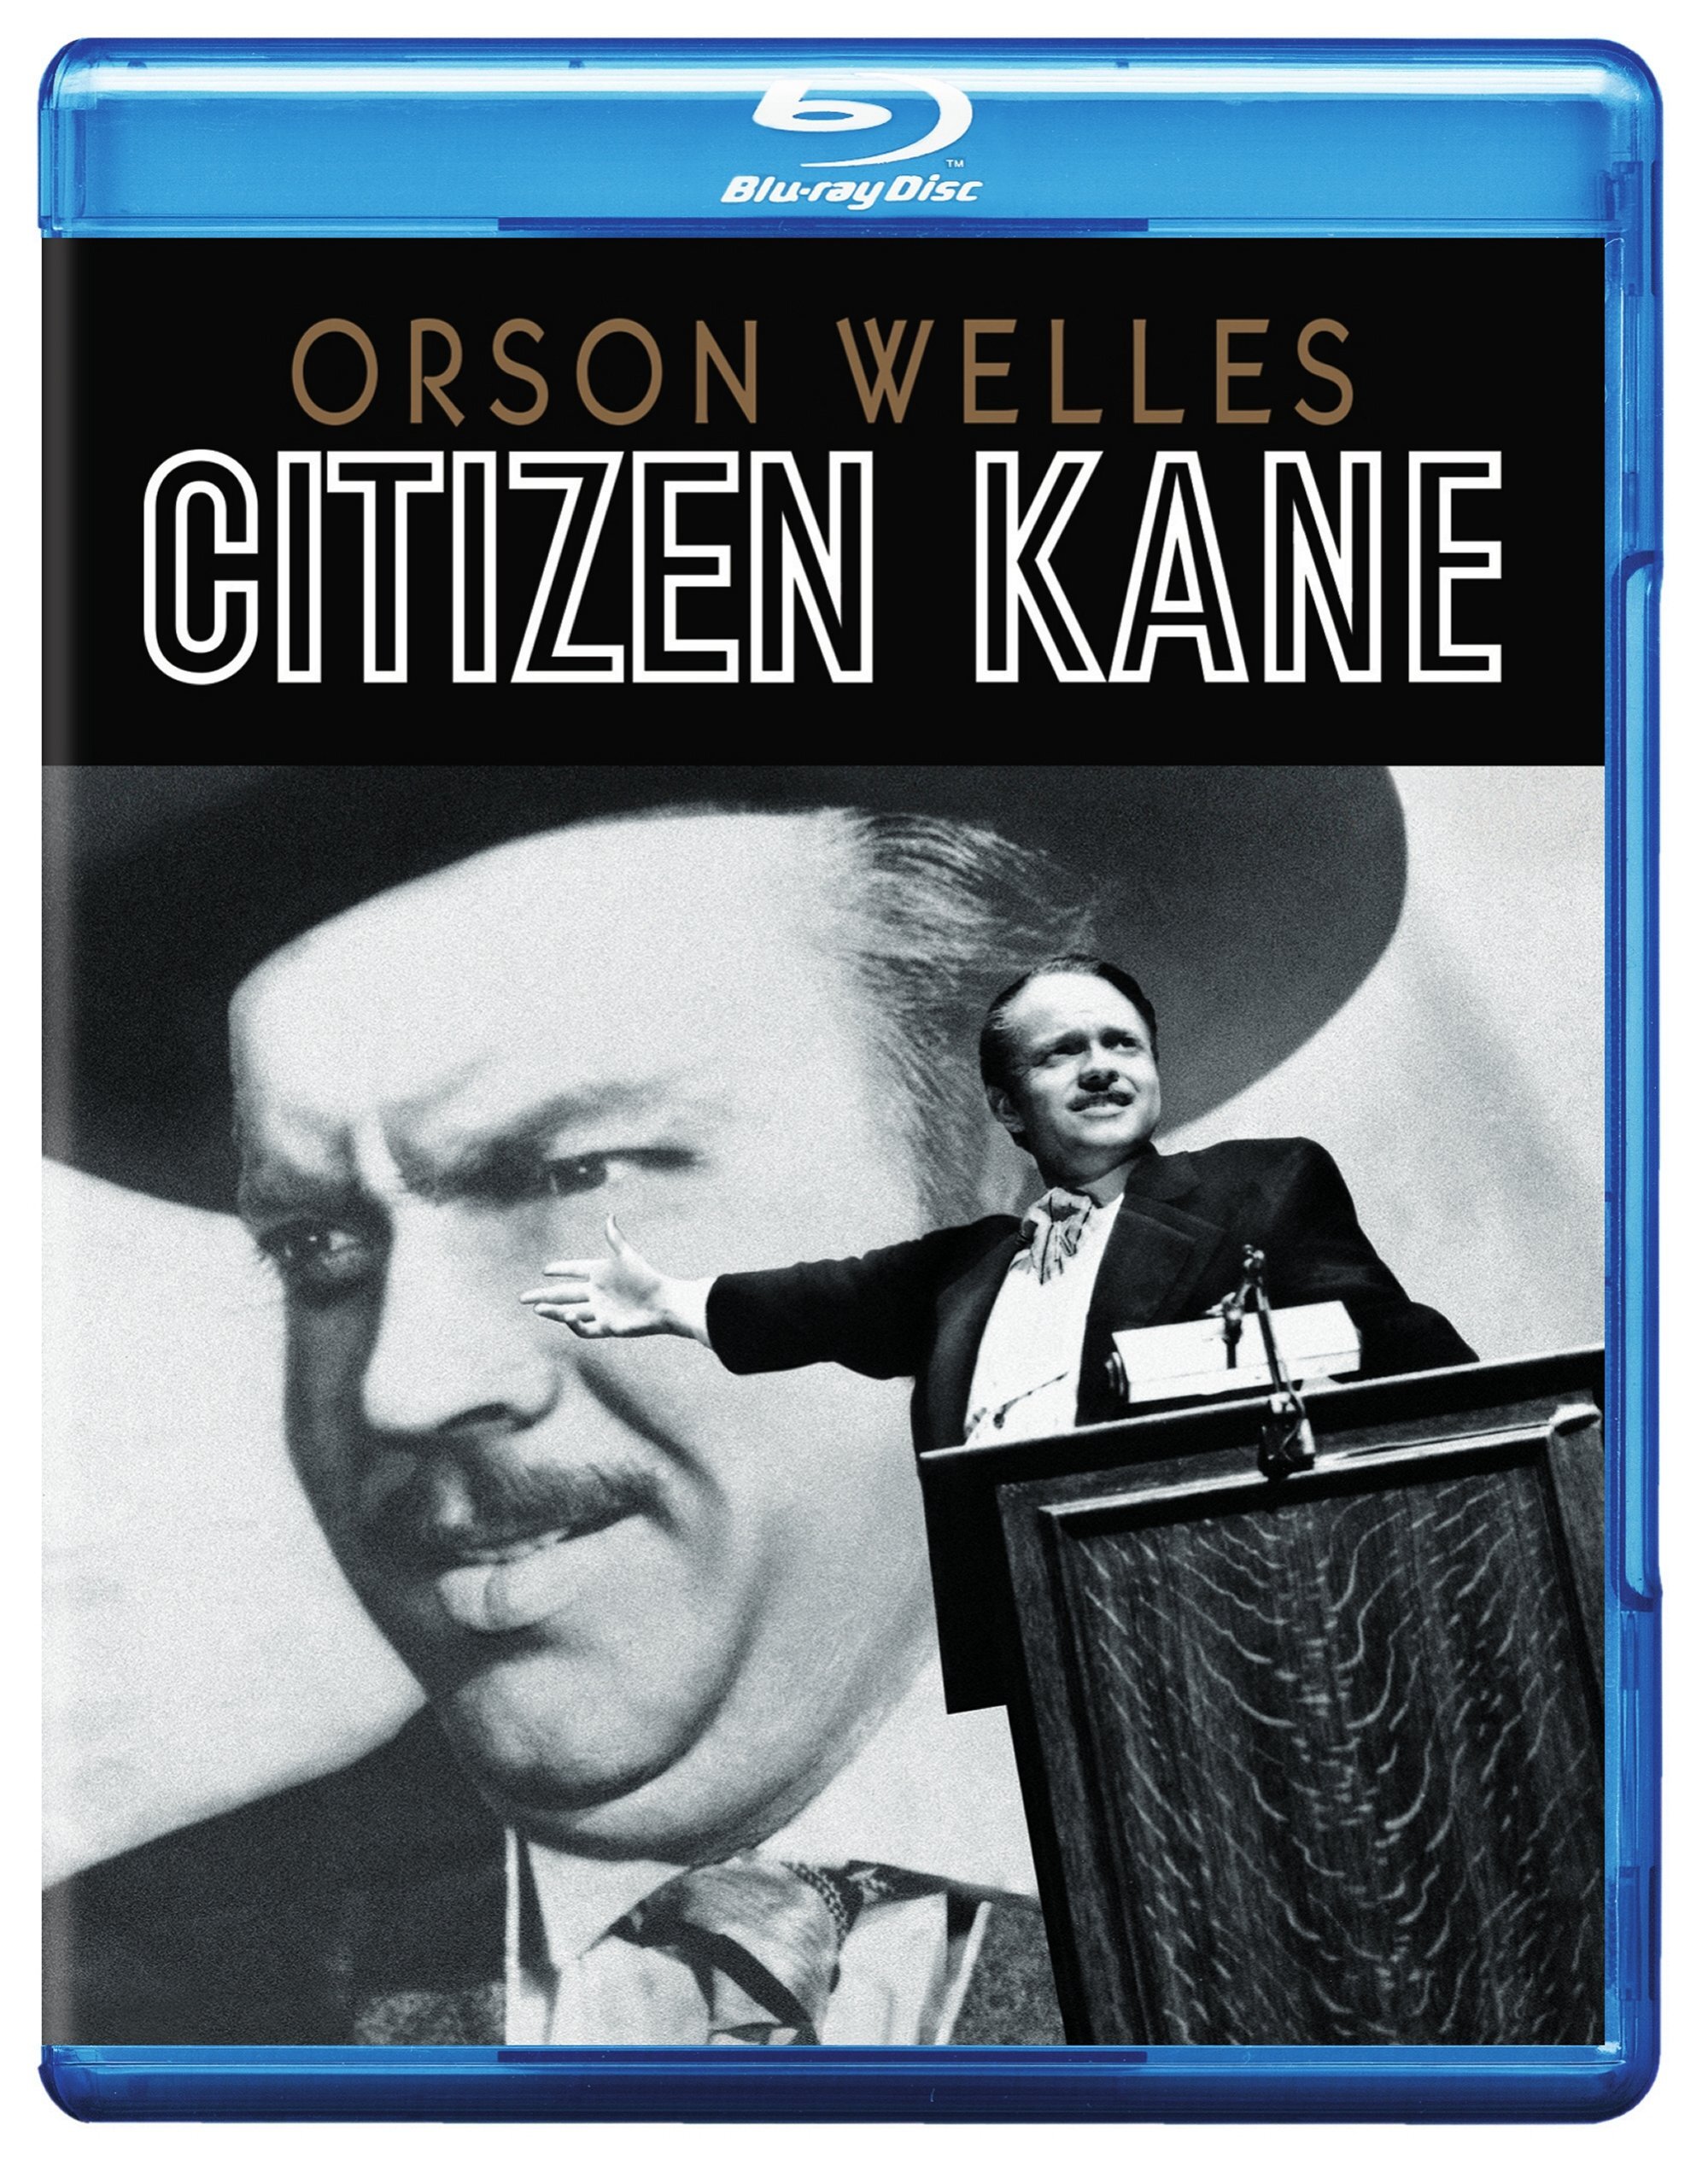 Citizen Kane (75th Anniversary Edition) - Blu-ray [ 1941 ]  - Drama Movies On Blu-ray - Movies On GRUV